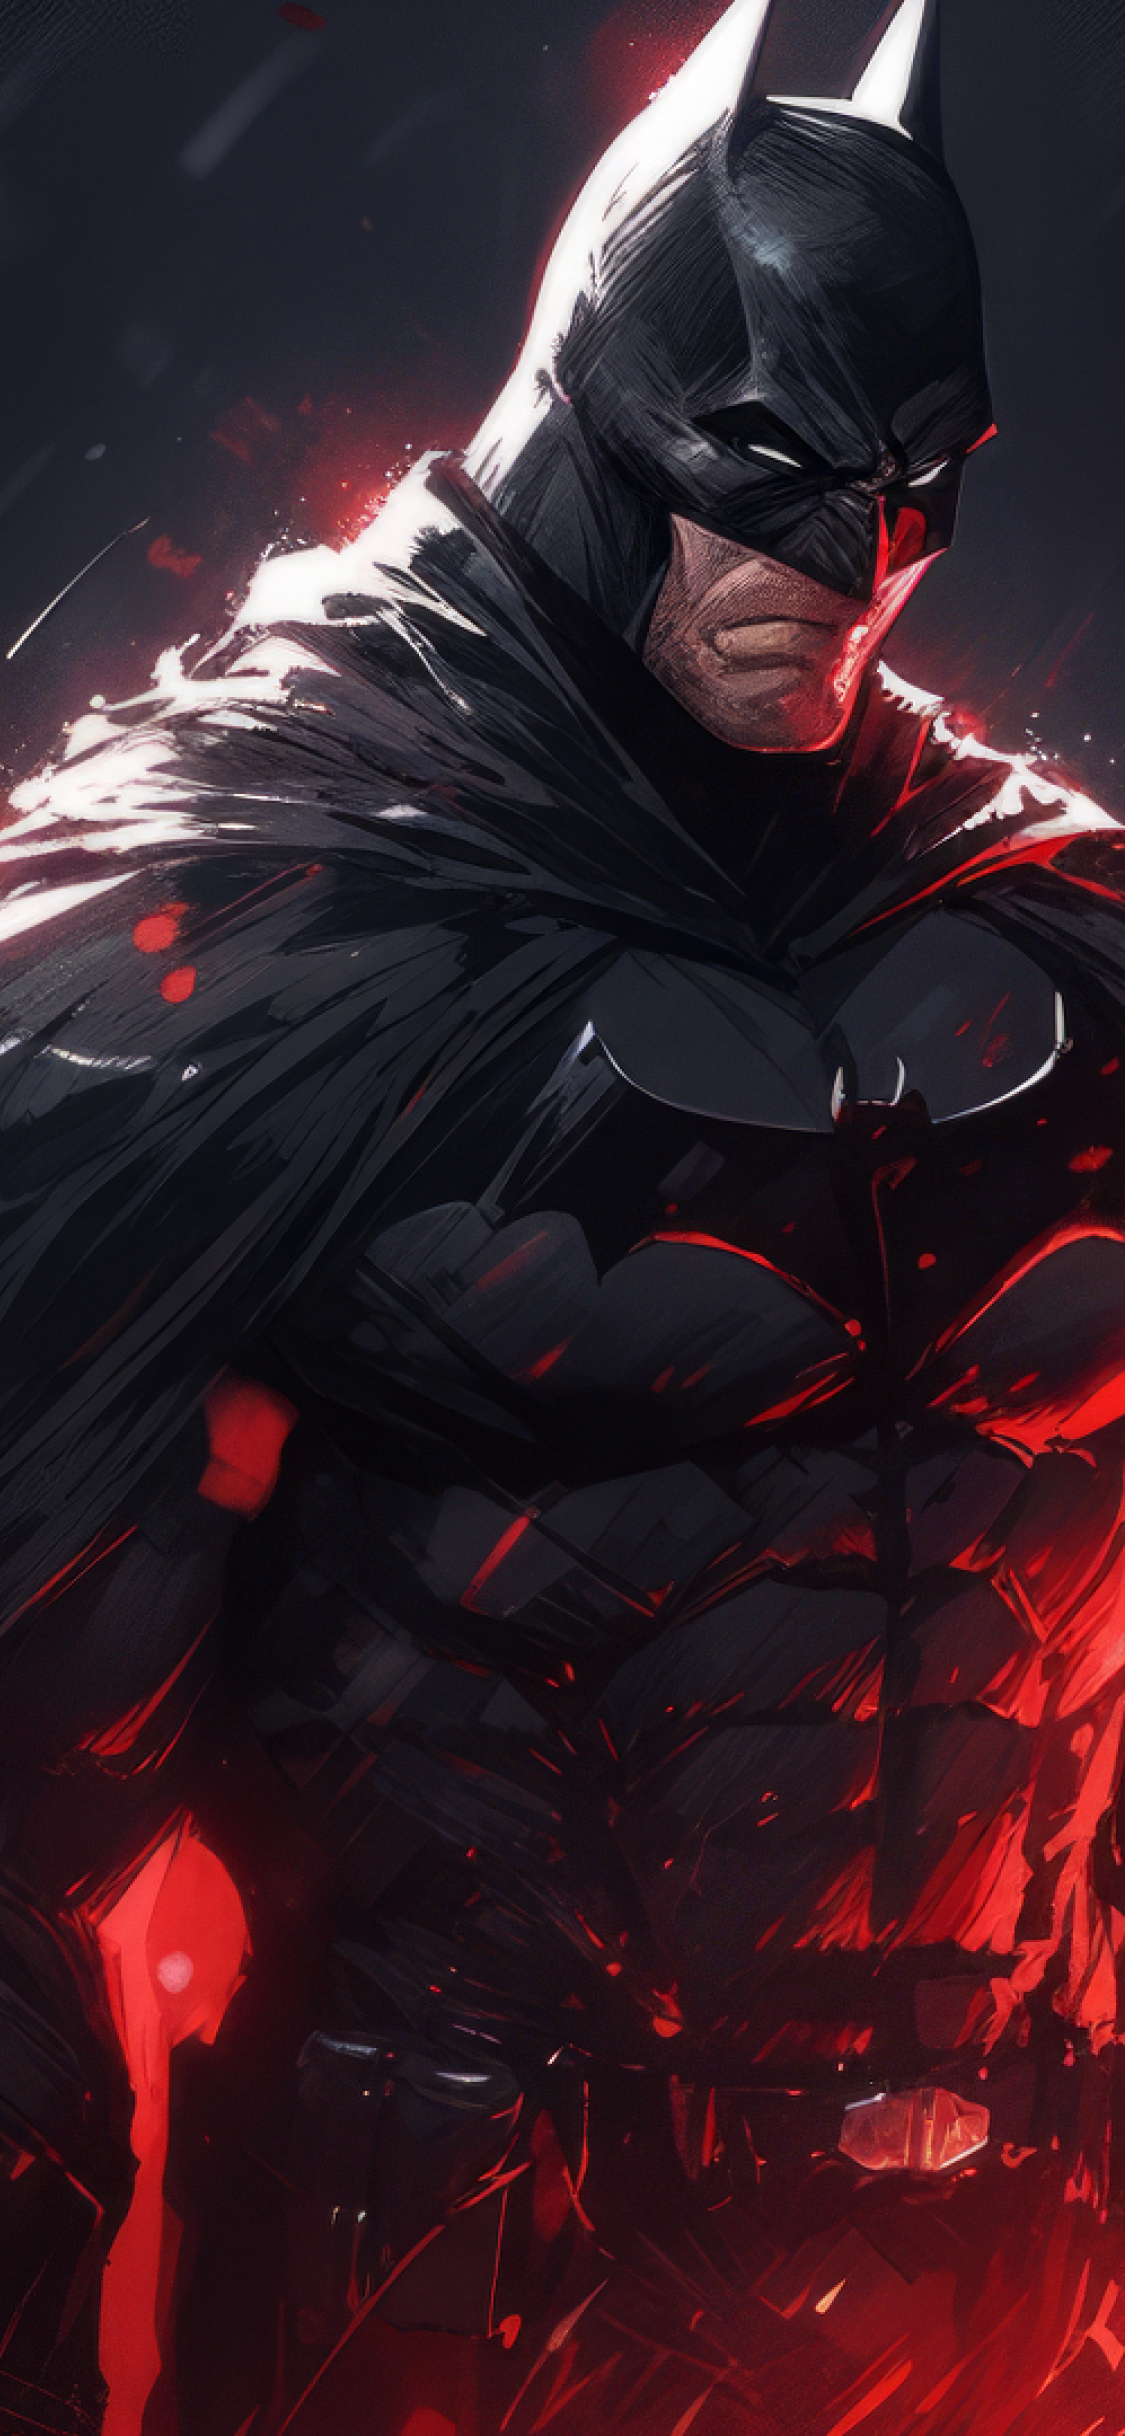 Wallpaper Dan Mora Batman, Batman, dc Comics, Comic Book, Art, Background -  Download Free Image